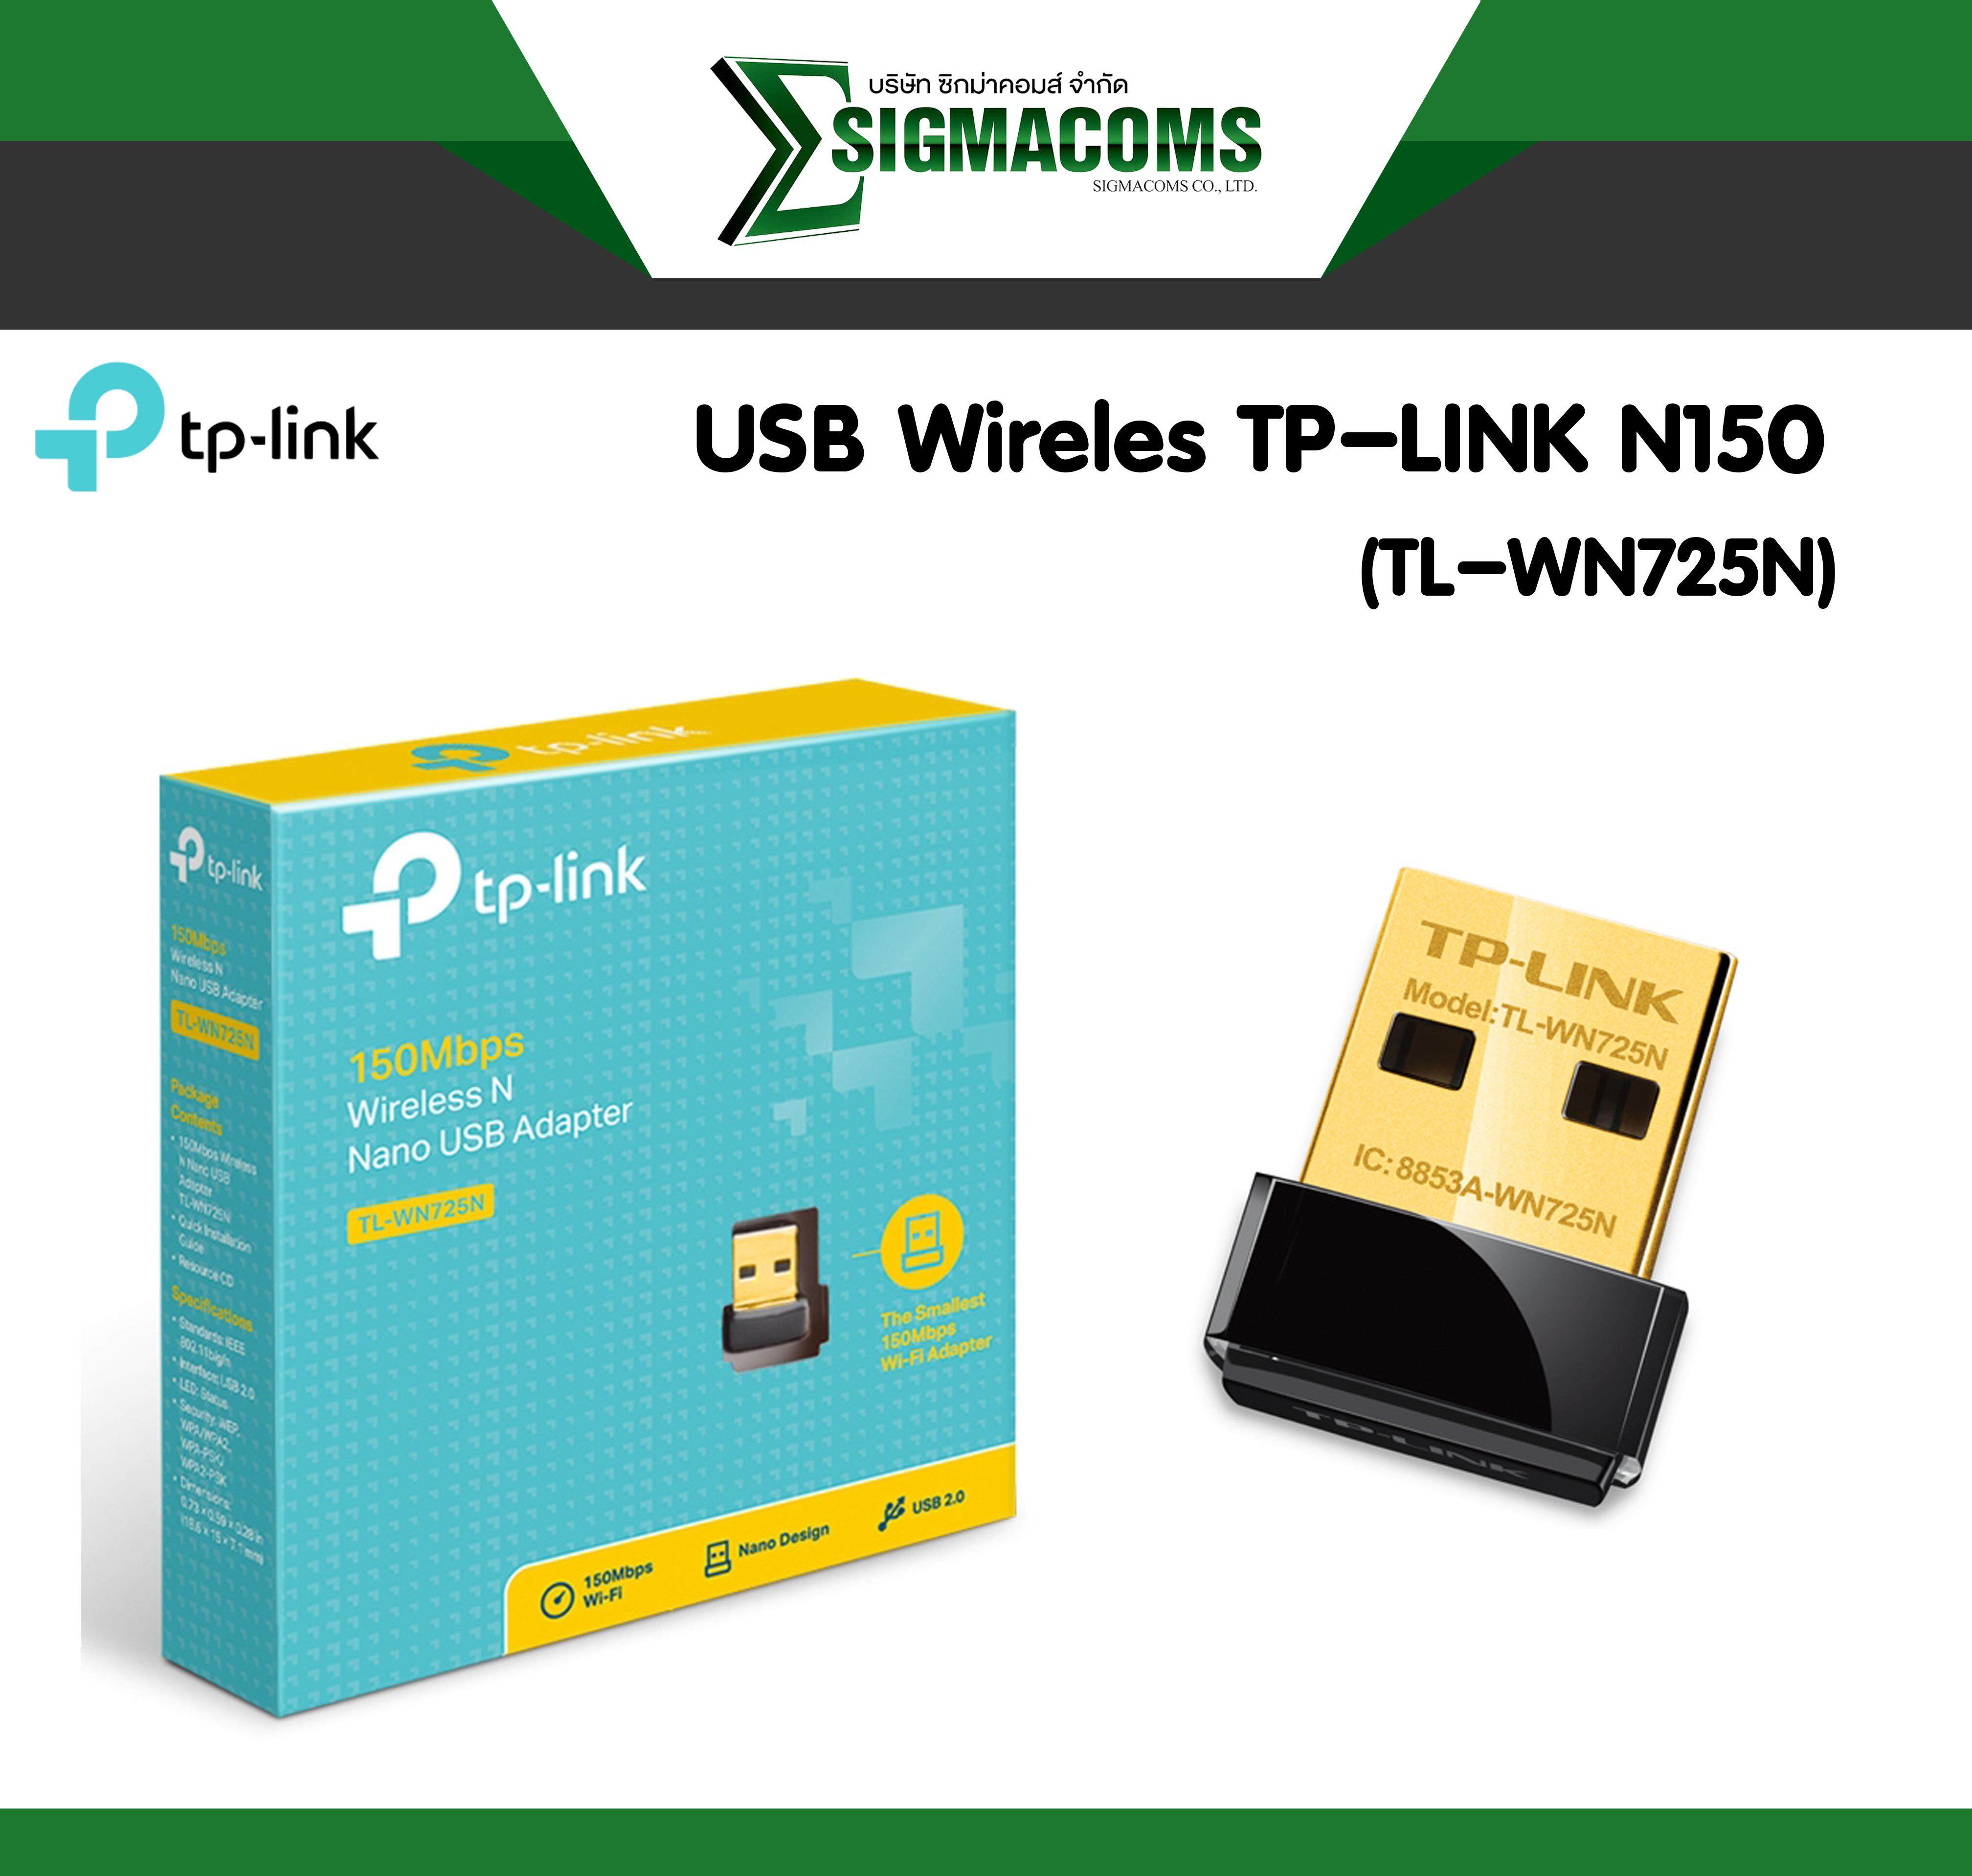 Network USB Wireless Adapter TP-LINK TL-WN725N N150 ของใหม่ !! ประกัน Lifetime